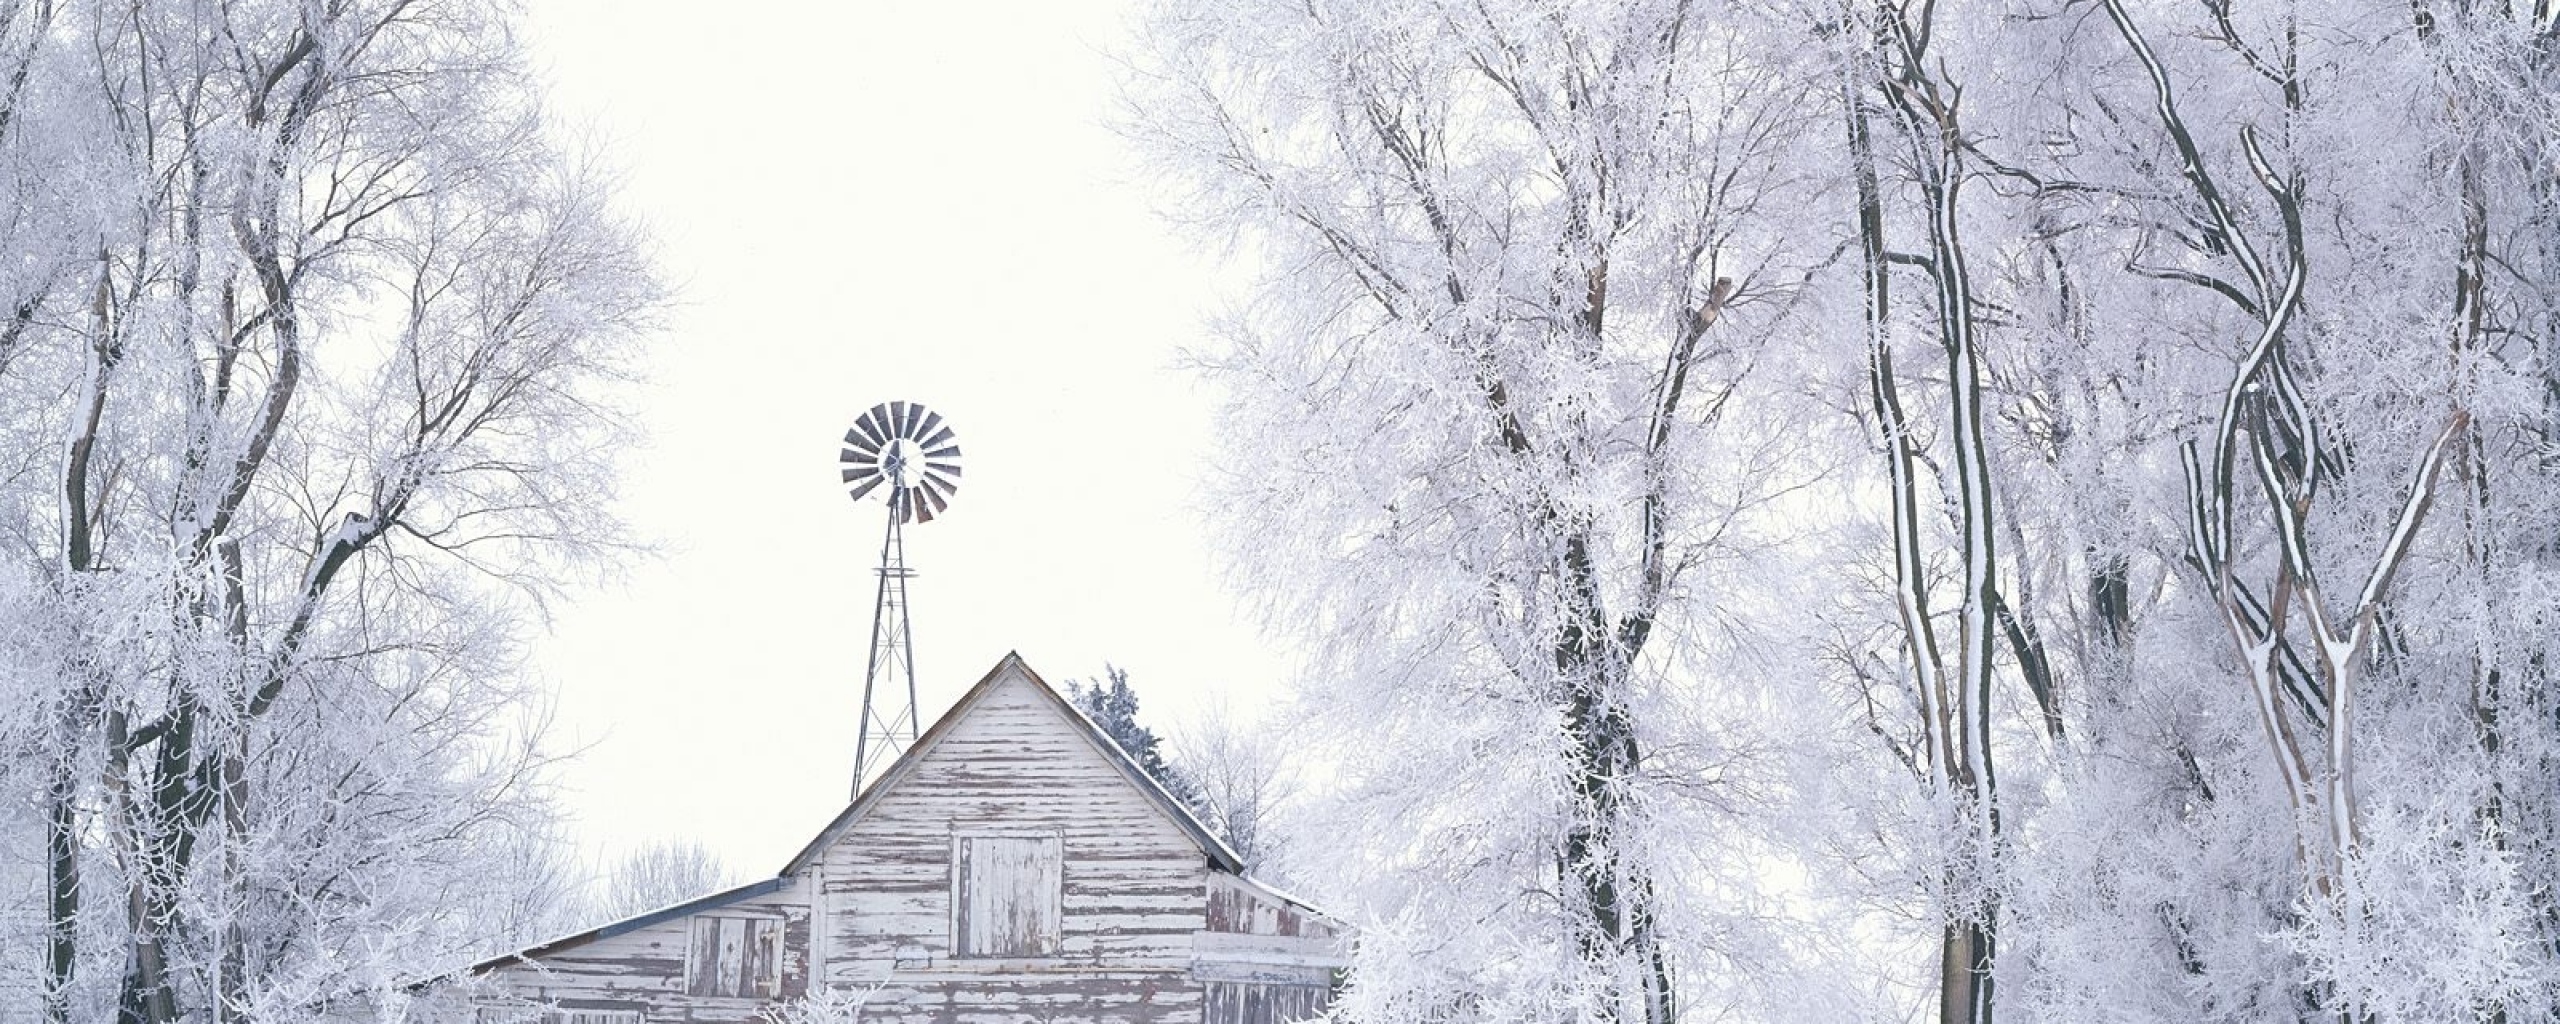 Wallpaper Winter Snow House